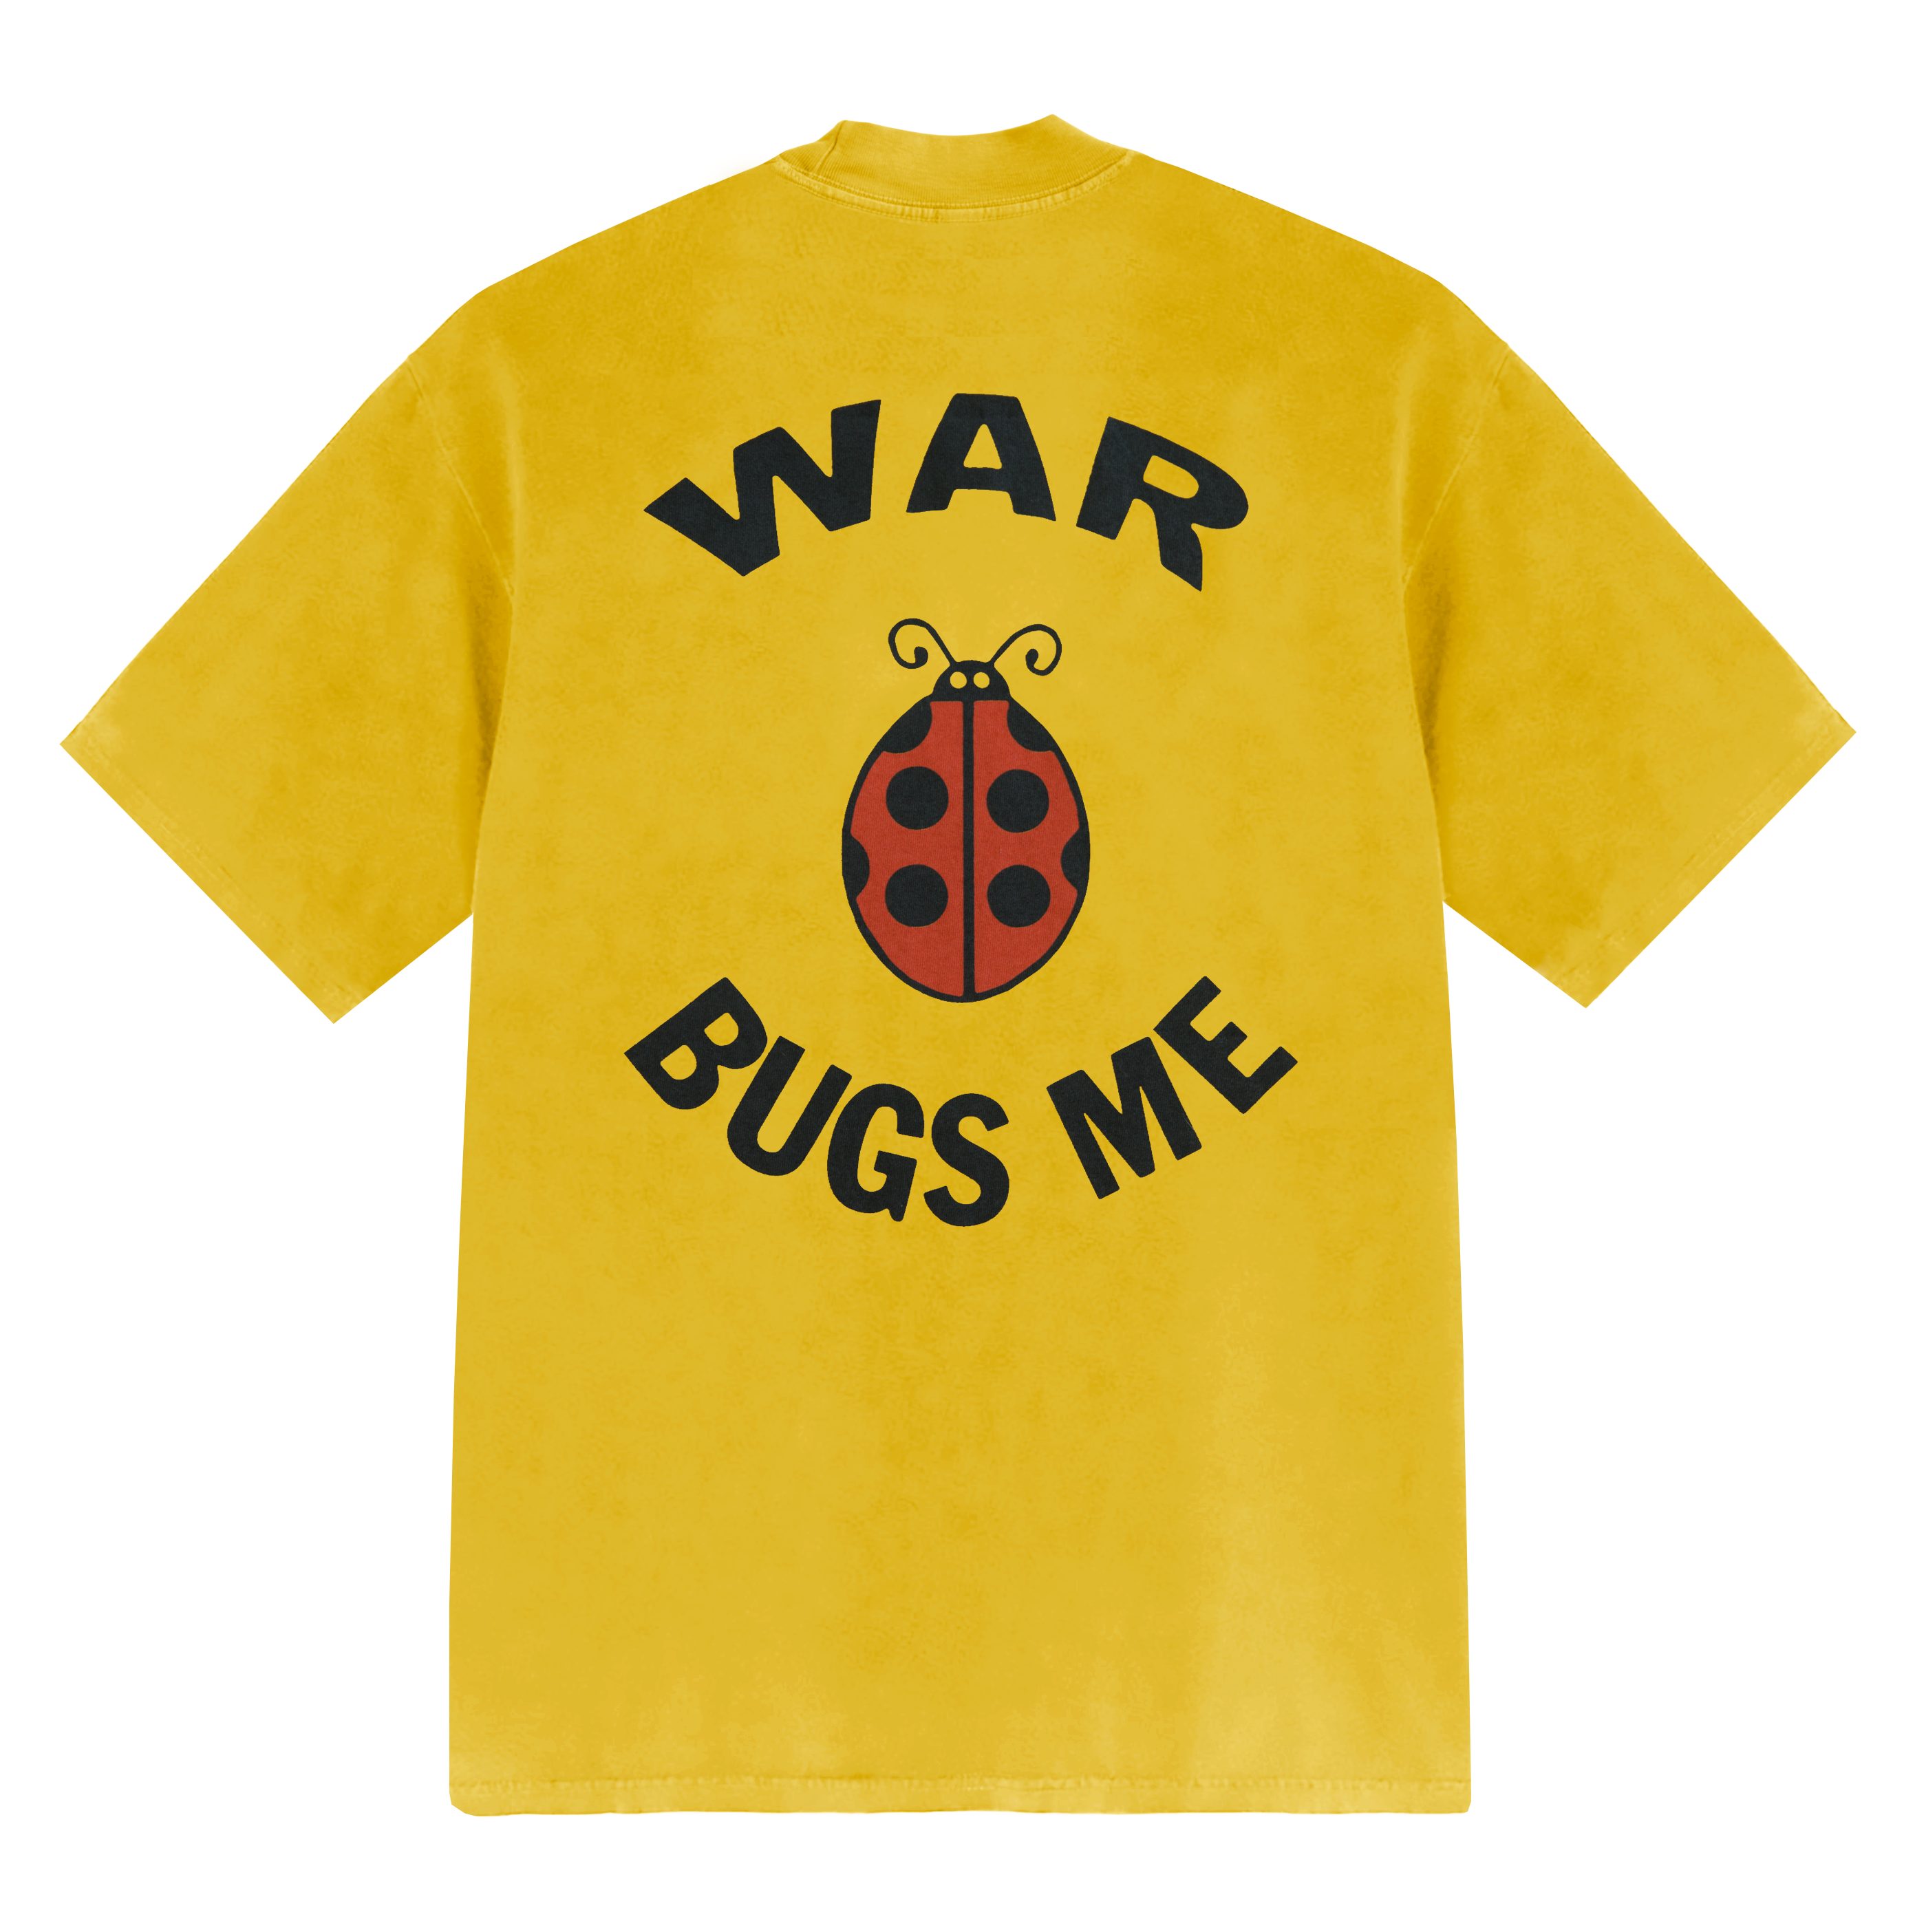 war bugs me - War Bugs Me - Logo Tee - Yellow